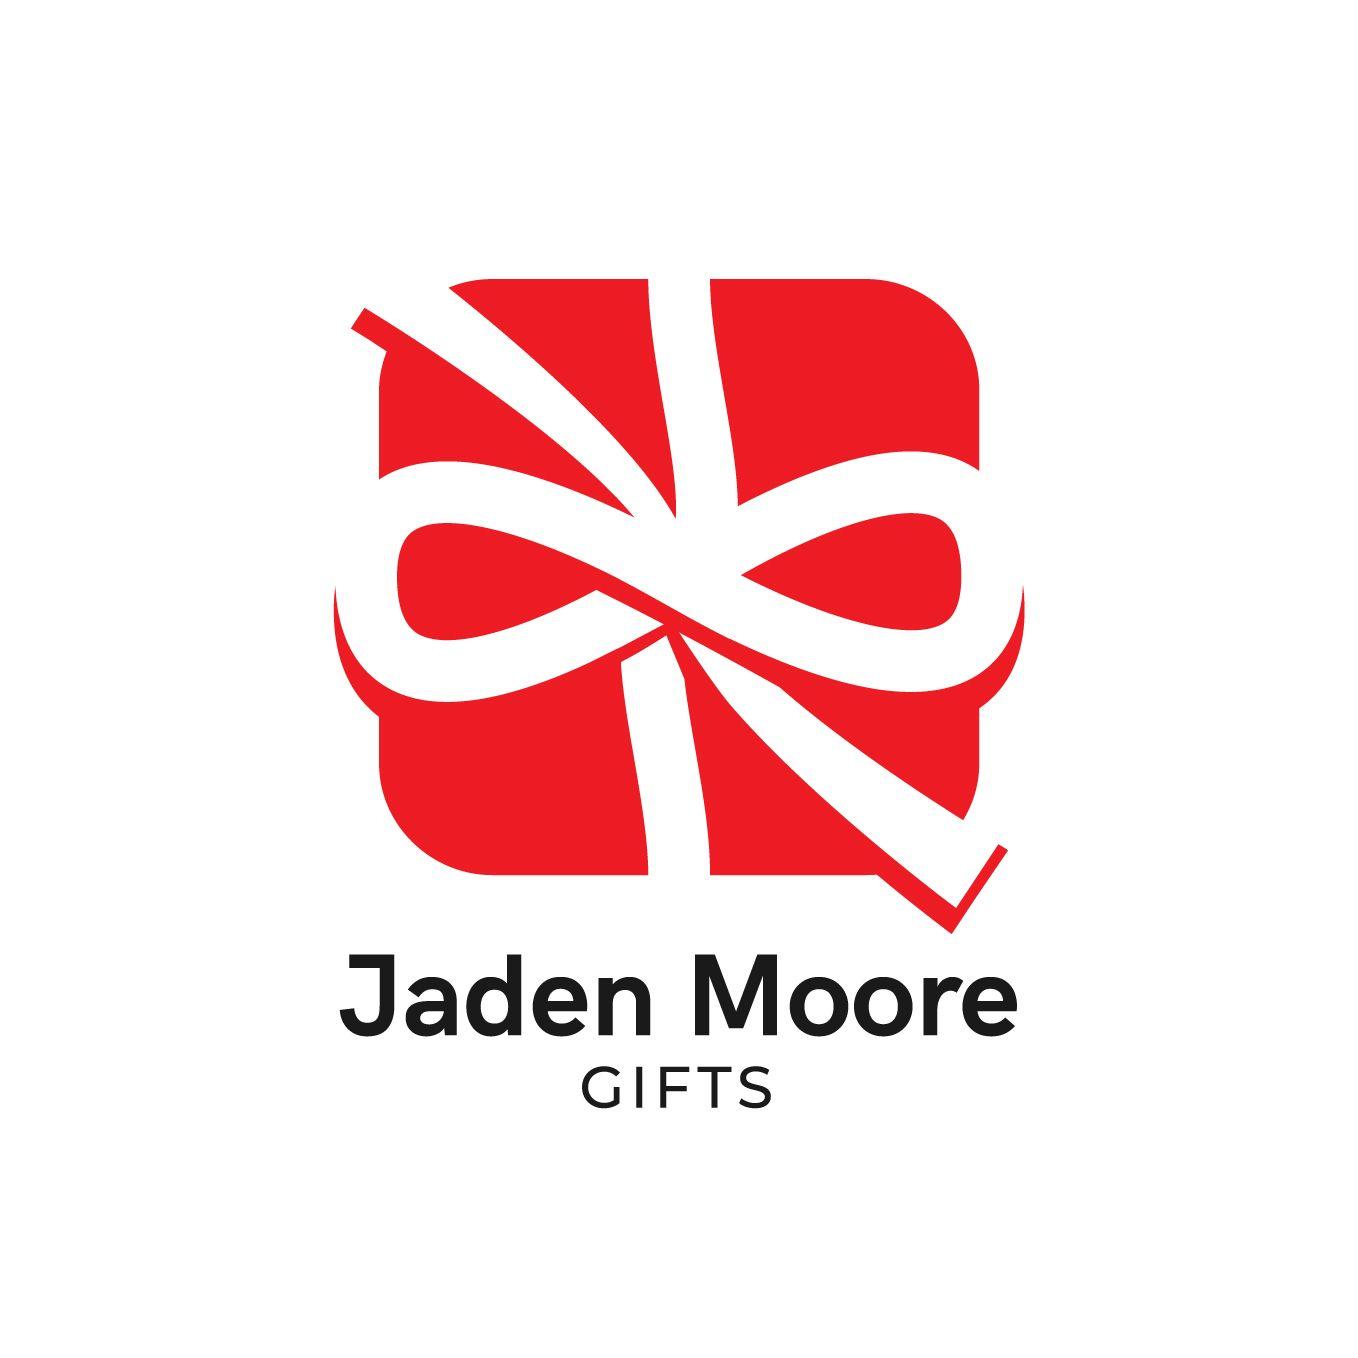 Jaden Logo - Upmarket, Elegant Logo Design for Jaden Moore of New York or Jaden ...